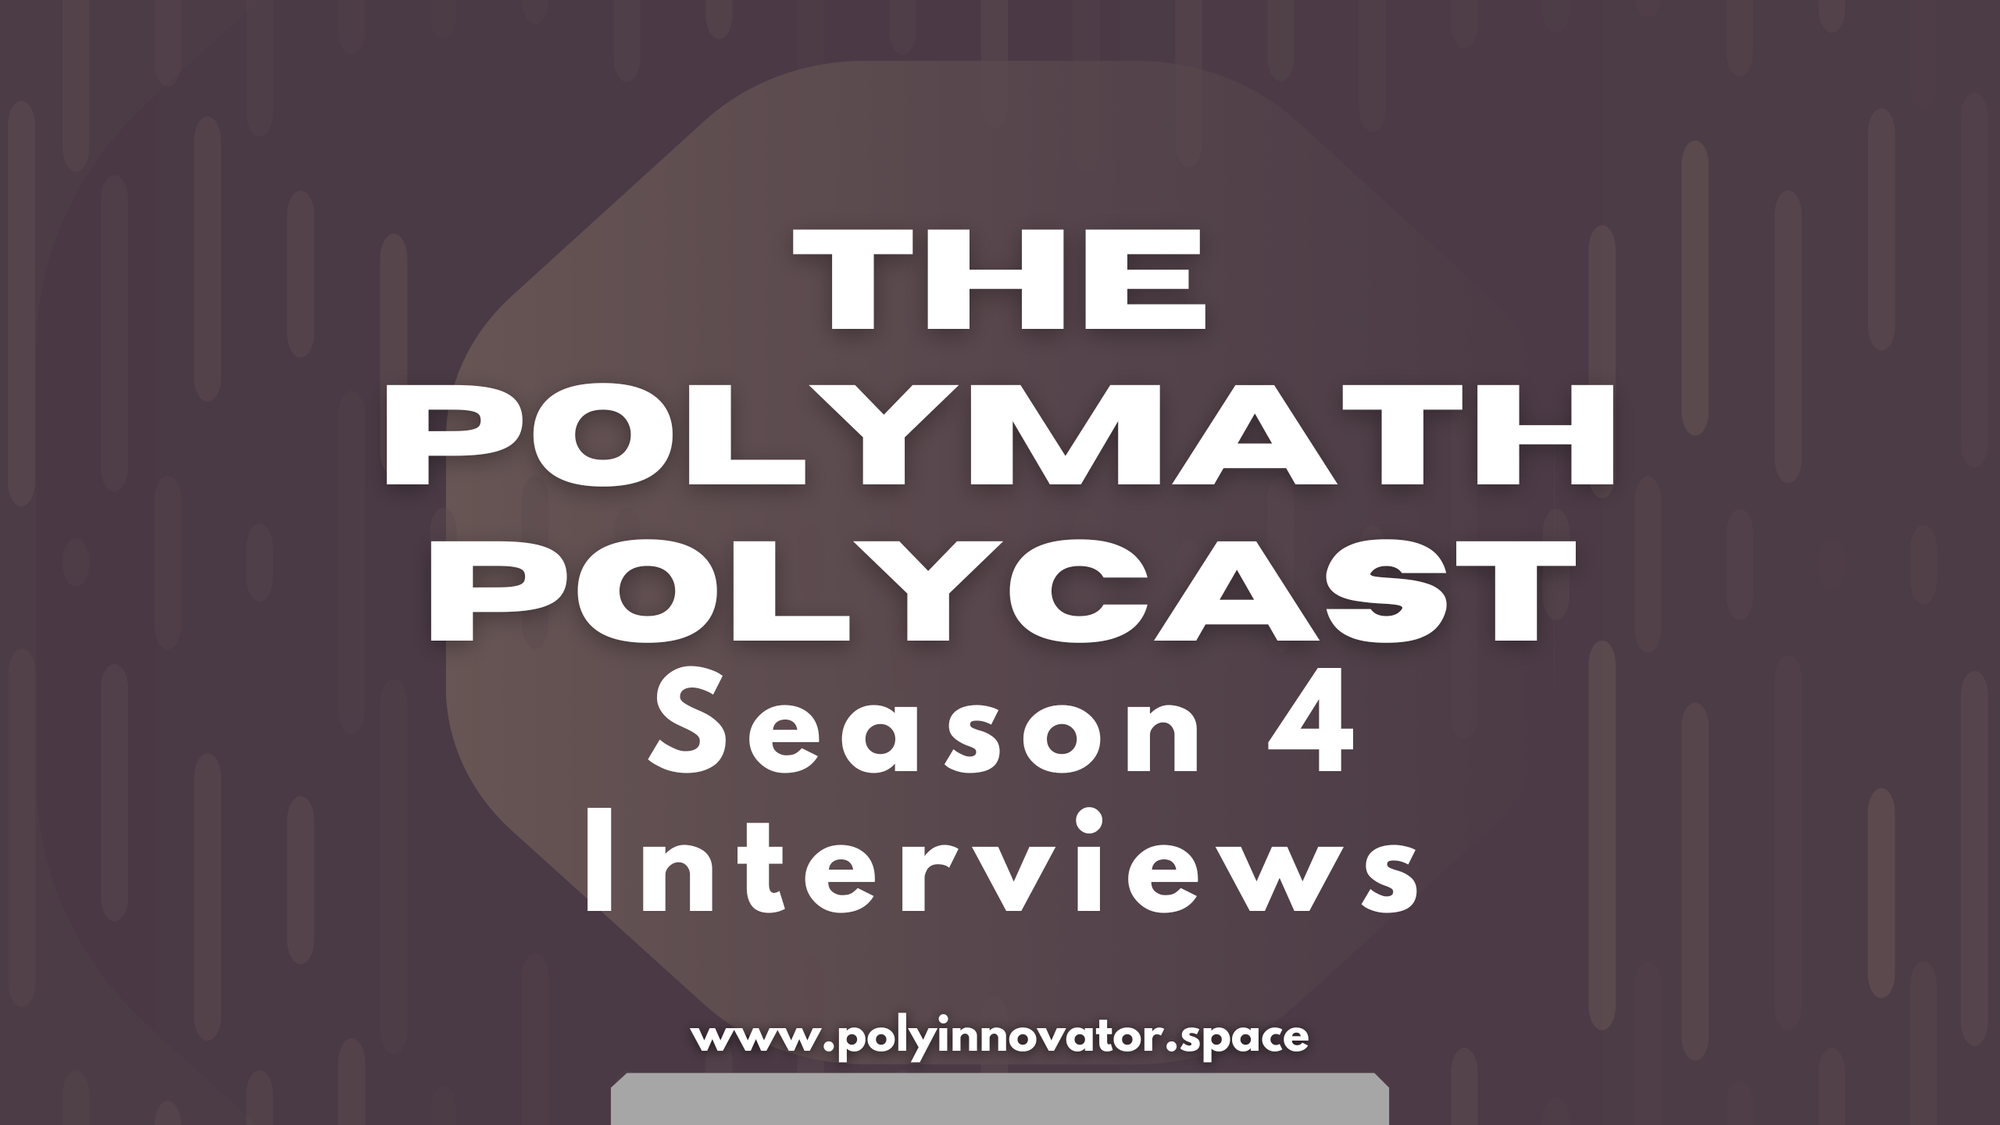 Season Four of The Polymath Polycast Interviews